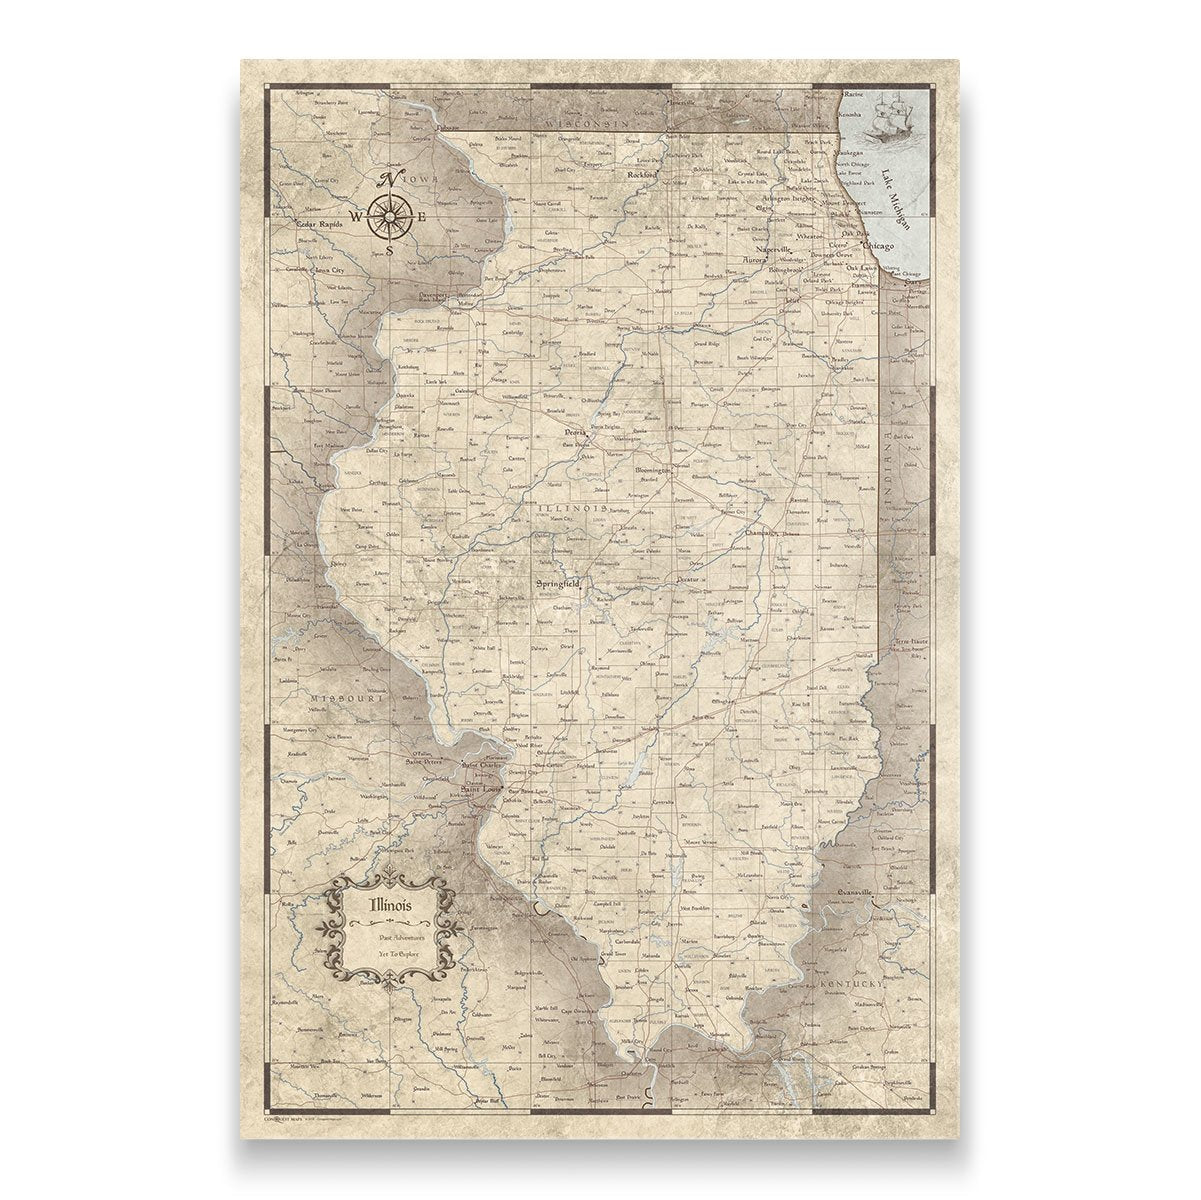 Illinois Poster Maps